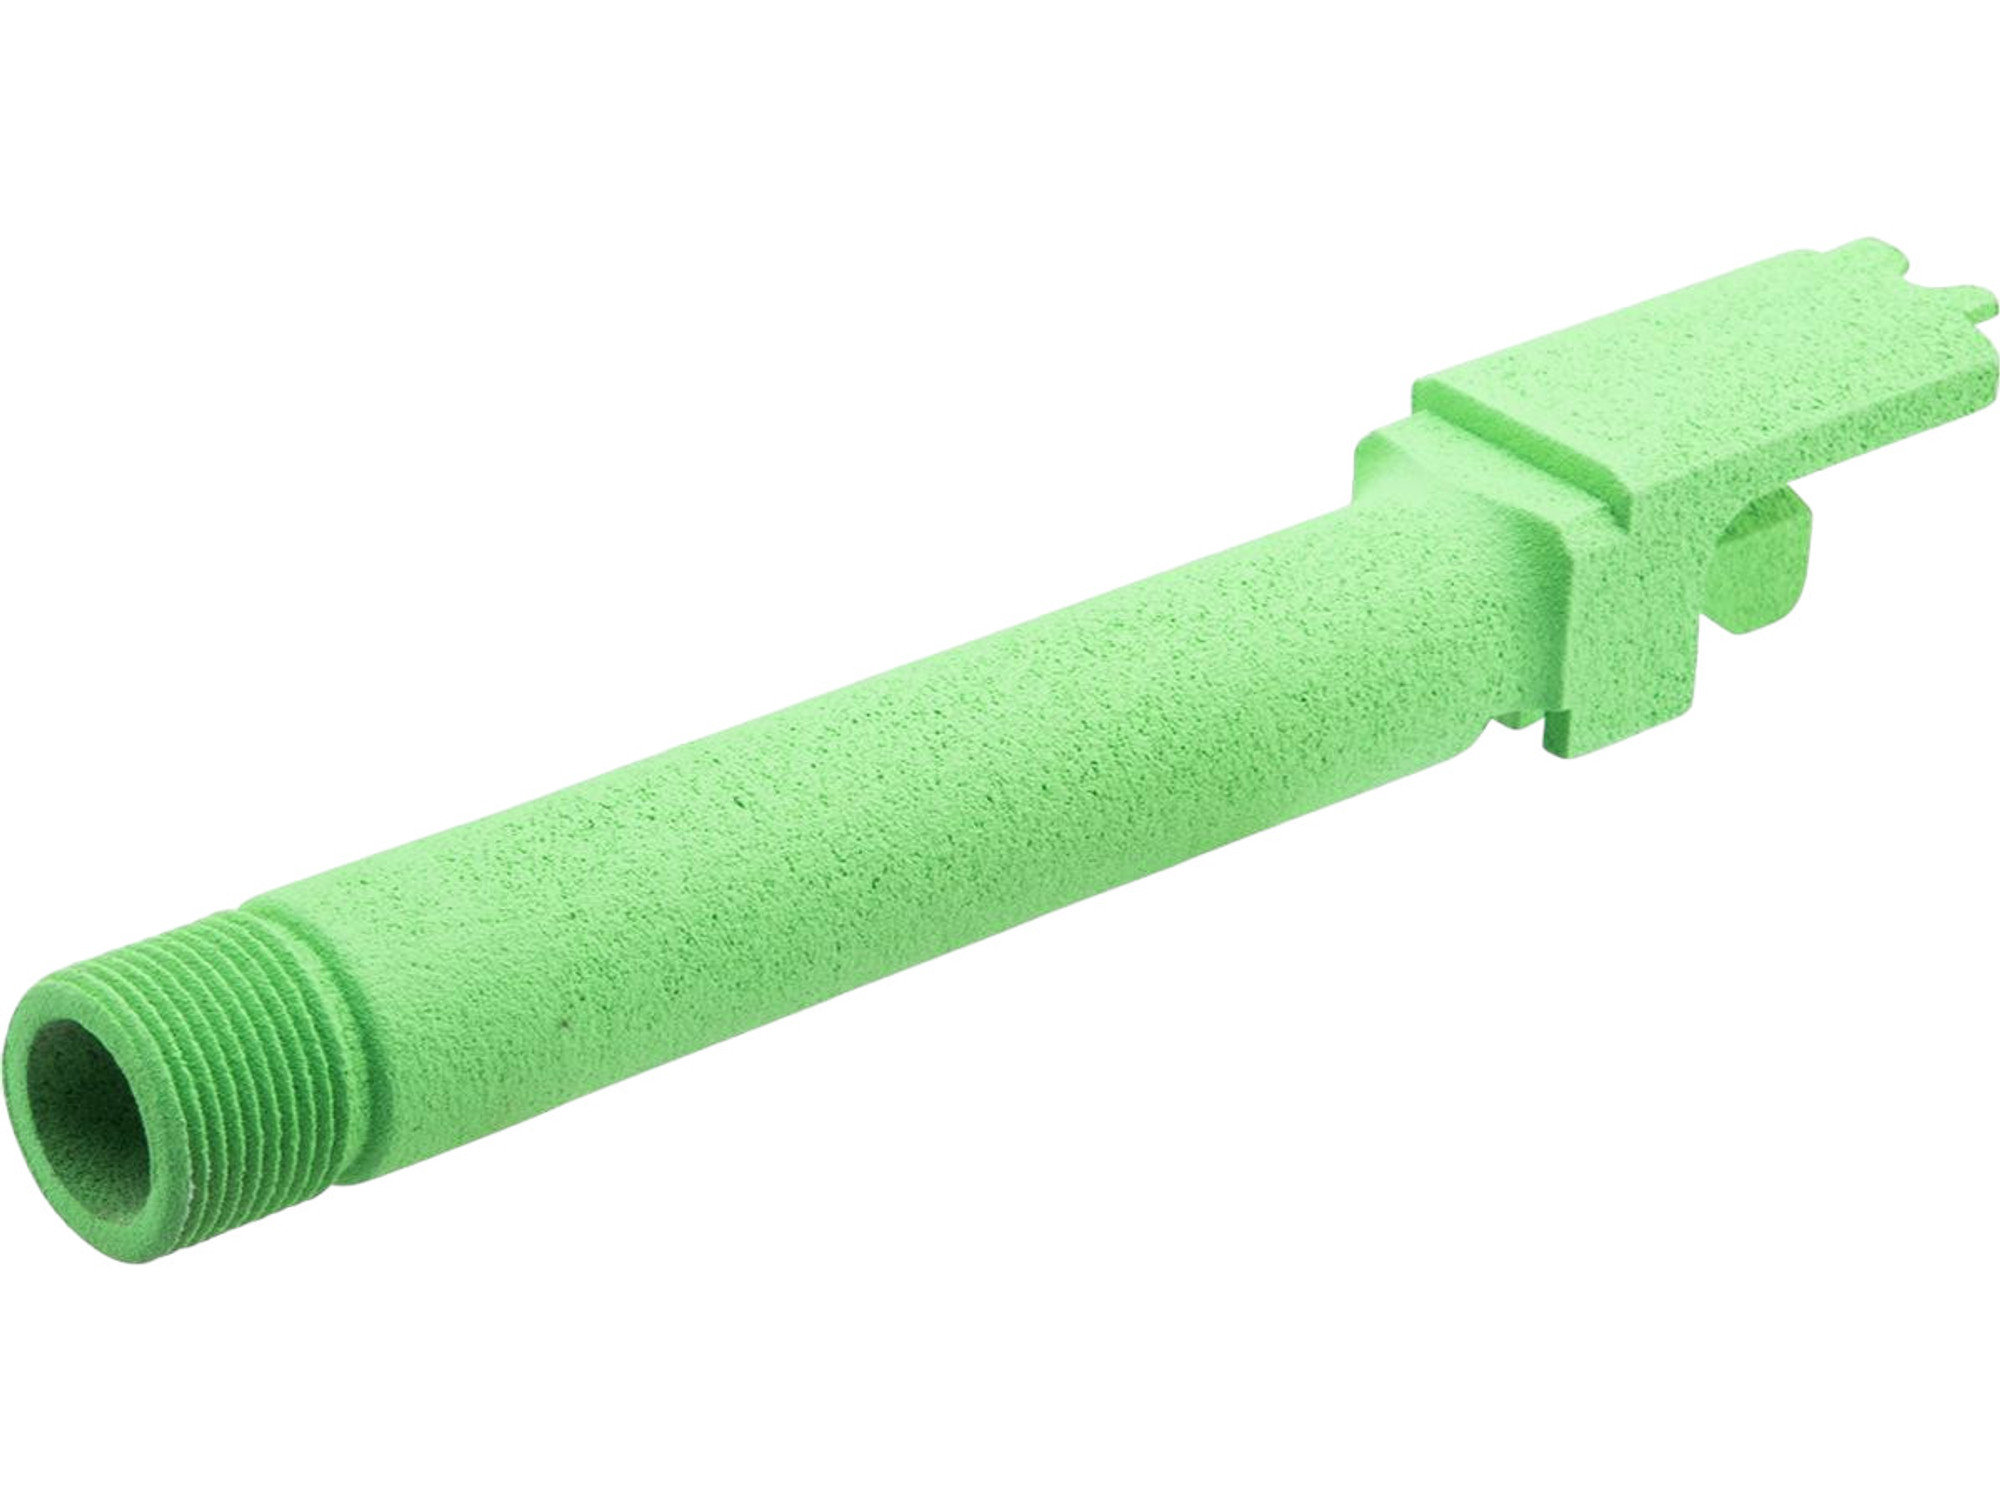 Tapp Airsoft 3D Printed Threaded Barrel w/ Custom Cerakote for Tokyo Marui M&P Gas Blowback Airsoft Pistols (Color: Parakeet Green)